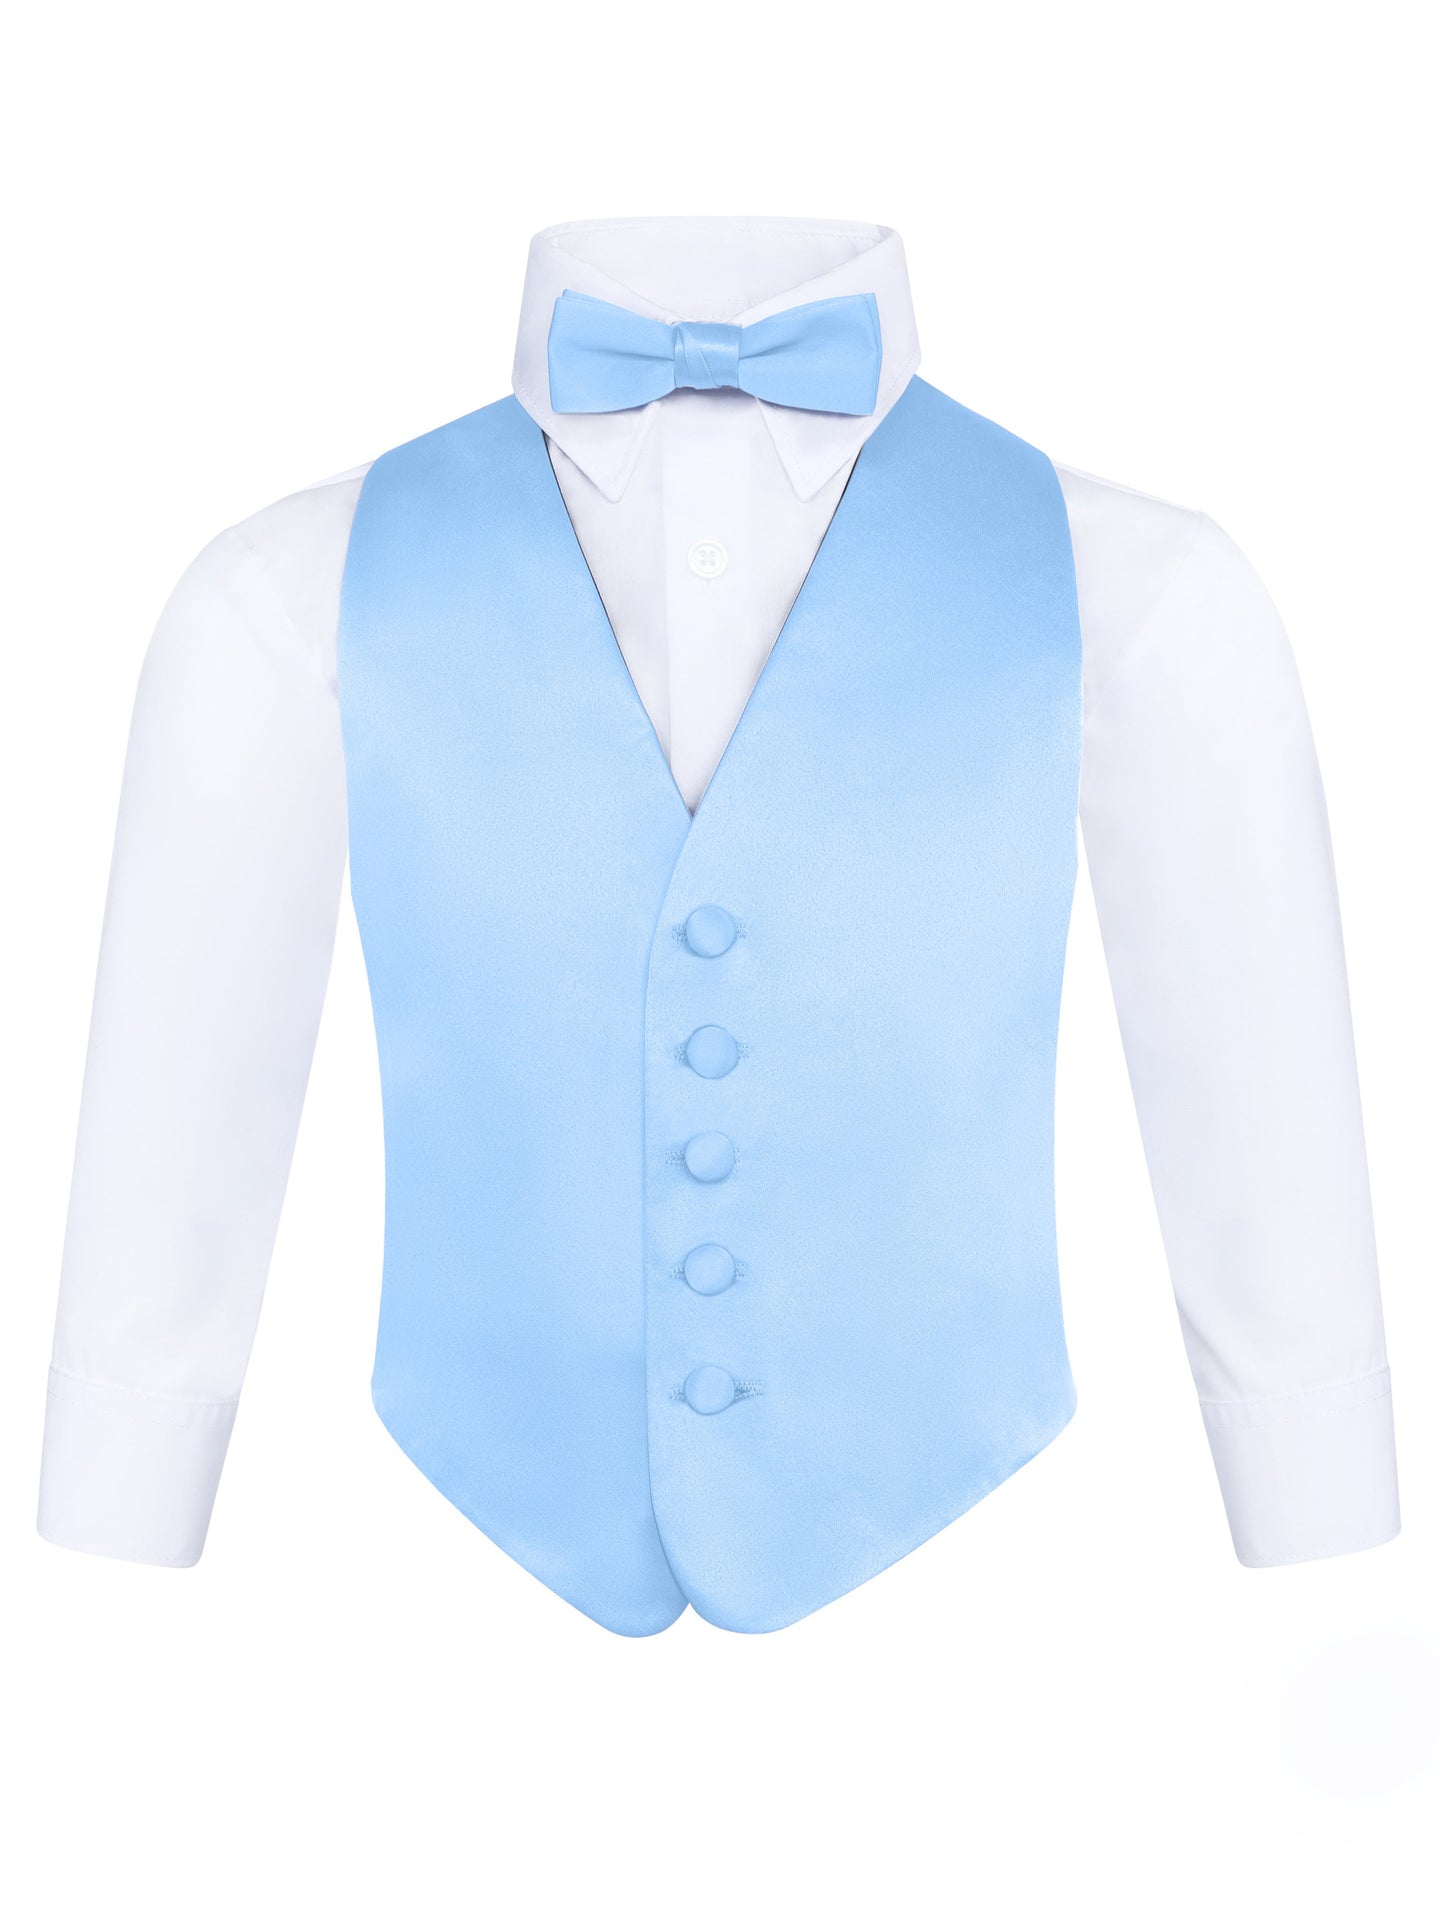 S.H. Churchill & Co. Boy's 3 Piece Light Blue Backless Formal Vest Set - Includes Vest, Bow Tie, Pocket Square for Tuxedo or Suit